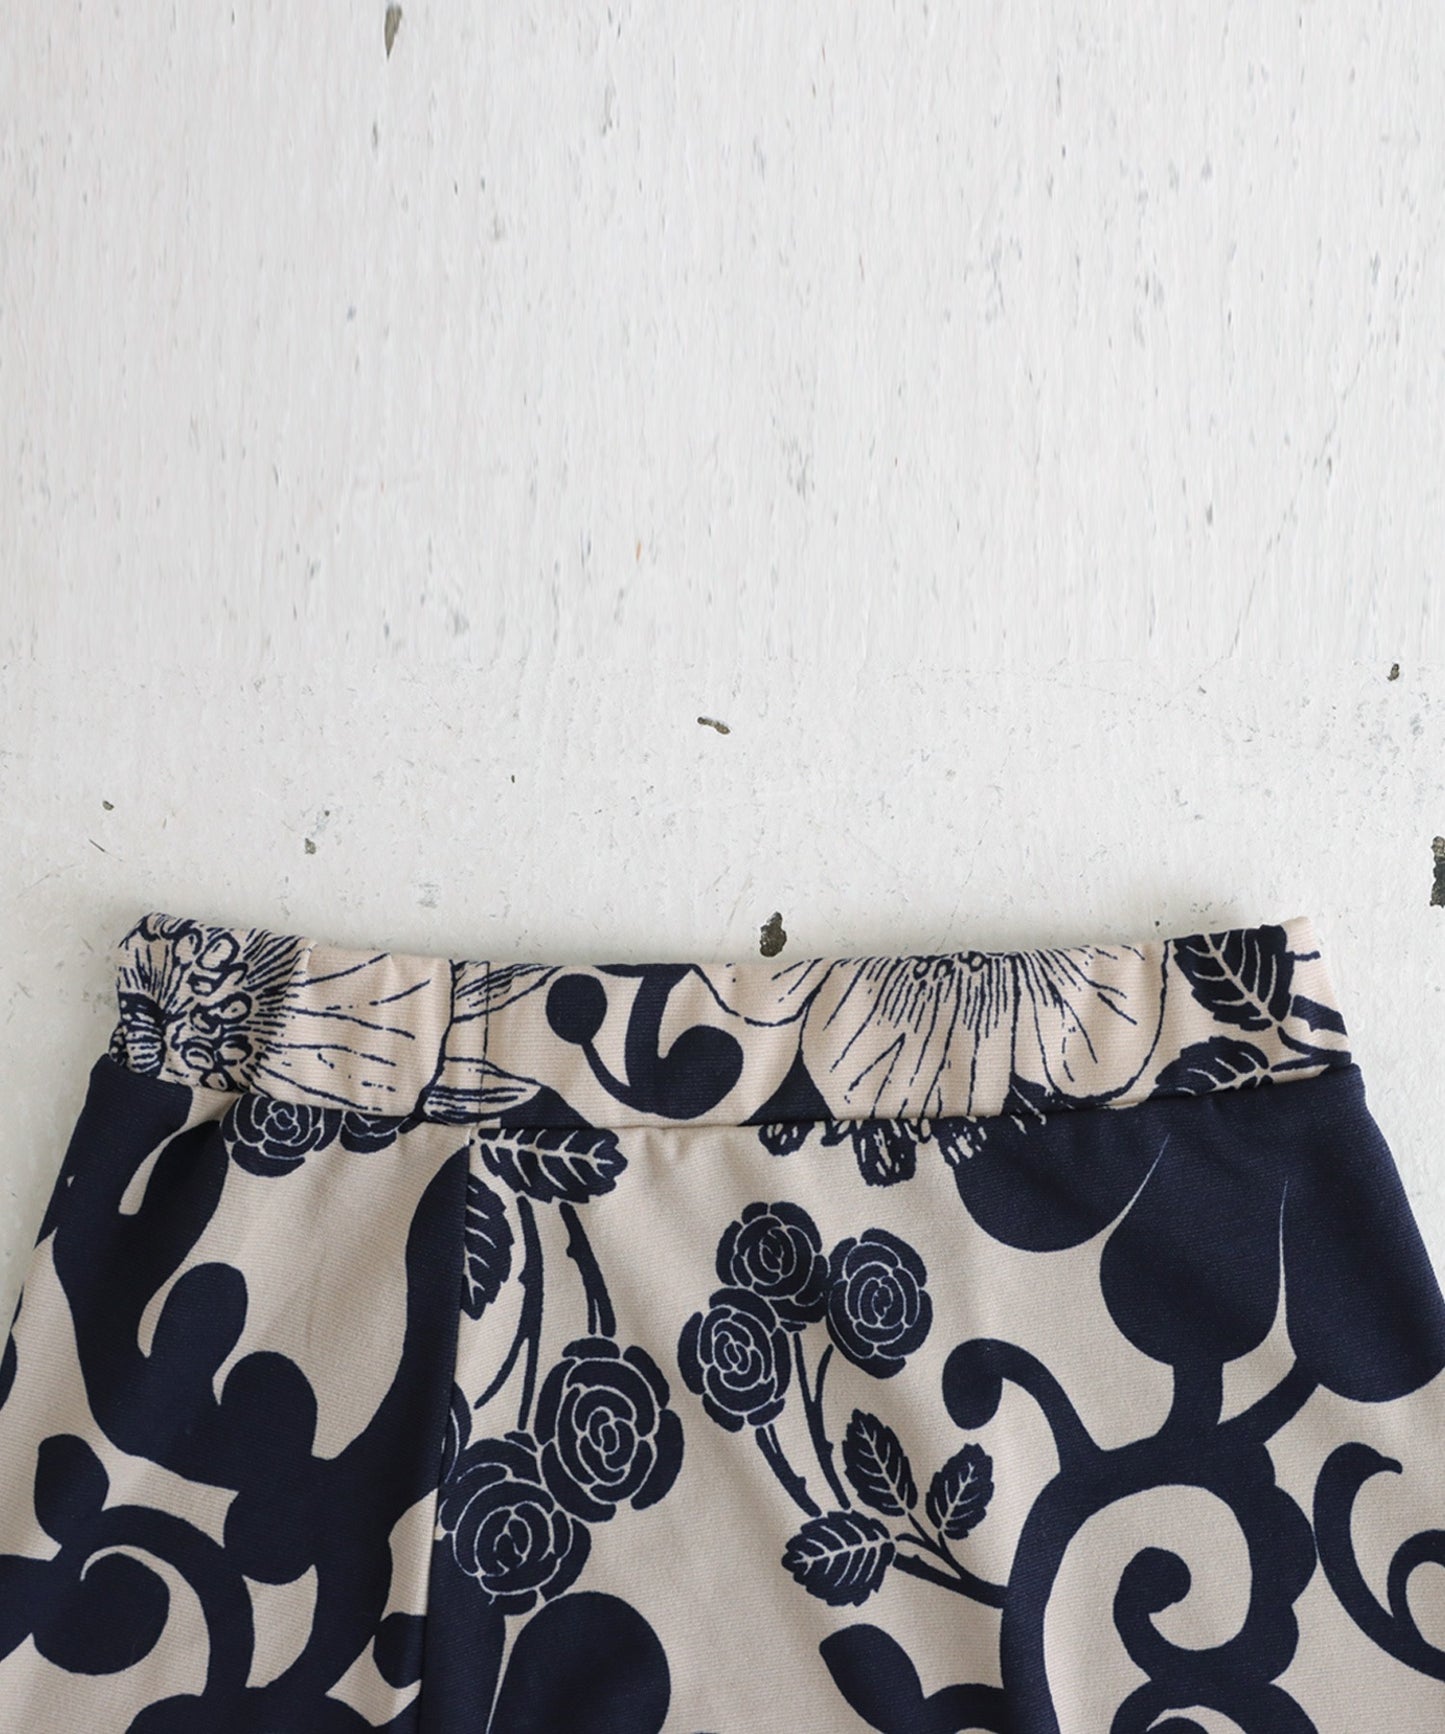 Floral pattern long skirt, Ladies